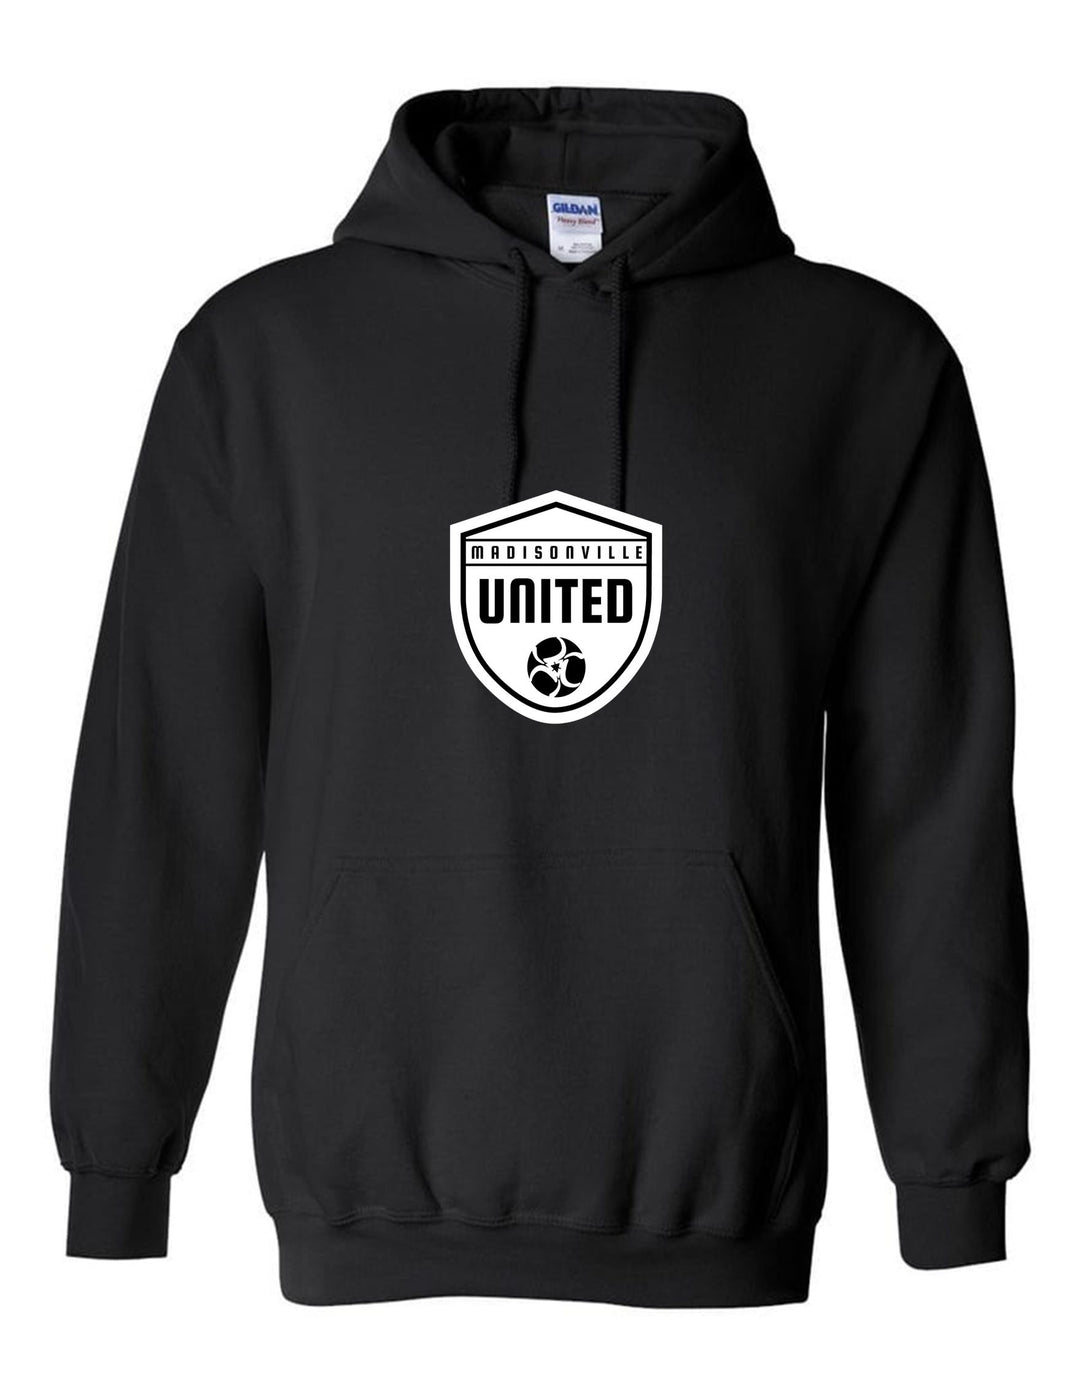 Madidsonville United Hoody - Black, Grey, Navy or White Madisonville United Spiritwear YOUTH MEDIUM BLACK - Third Coast Soccer